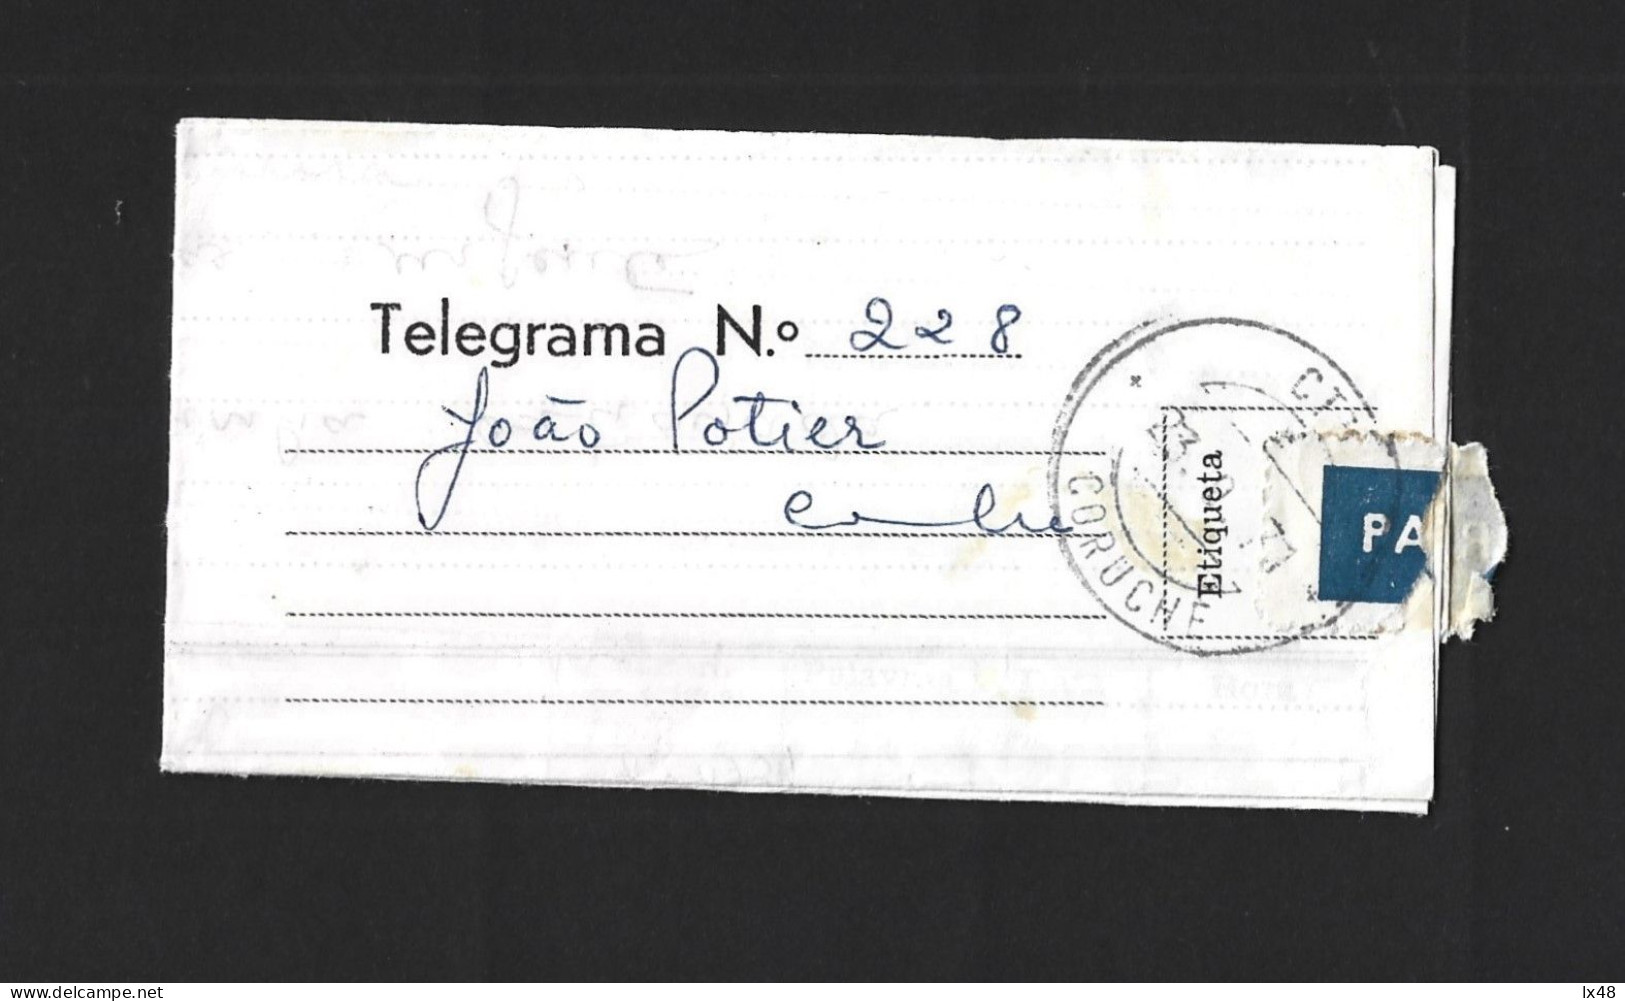 Telegrama Expedido De Angola 1971 Com Obliteração De Coruche, Santarém. Telegram Sent From Angola In 1971 With The Oblit - Covers & Documents